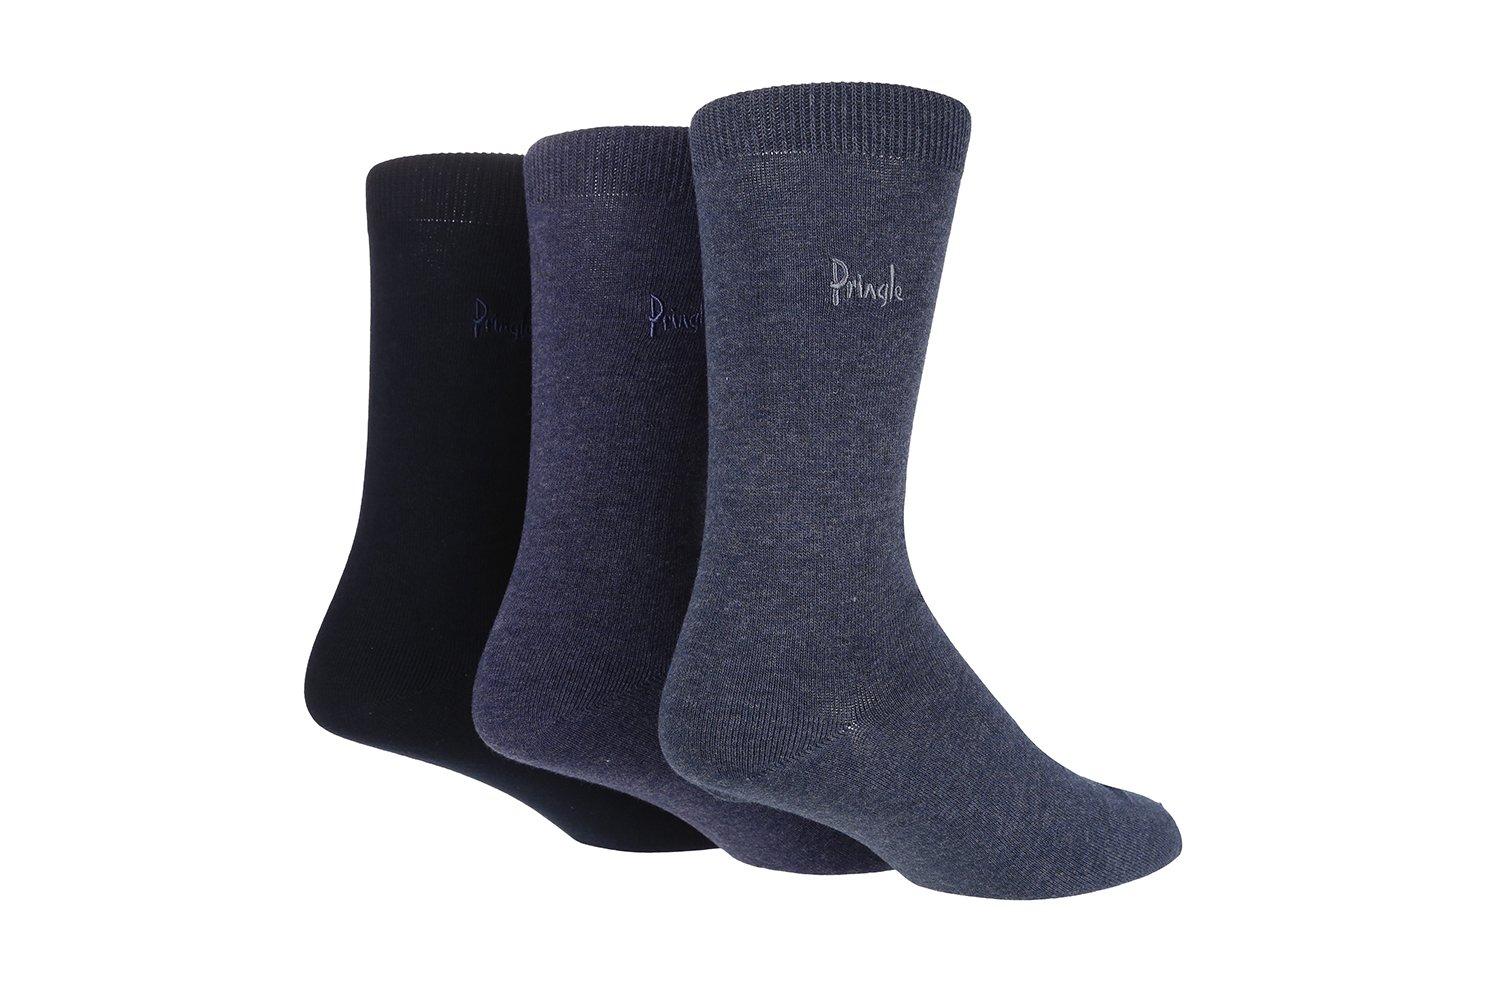 Underwear & Socks | 3 Pair Pack Endrick Socks | Pringle